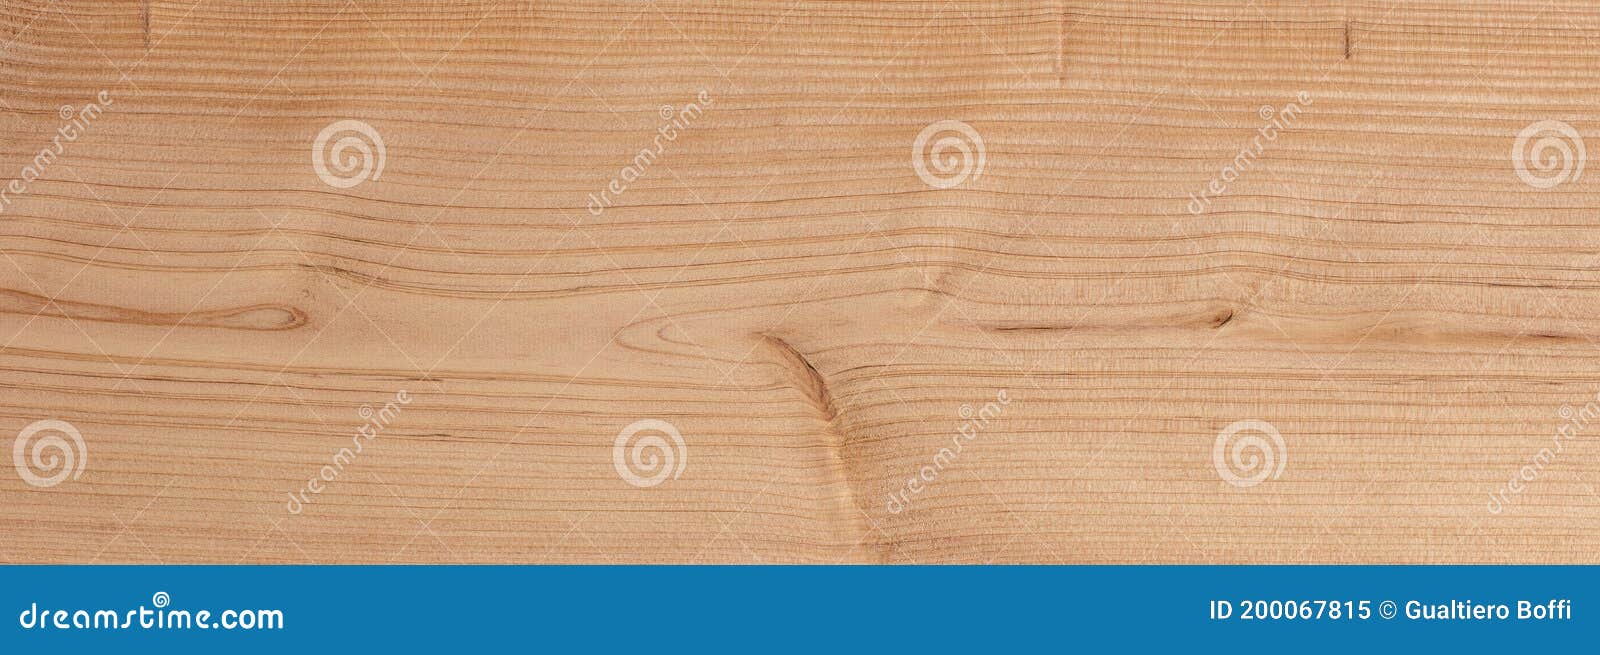 natural cedar wood texture